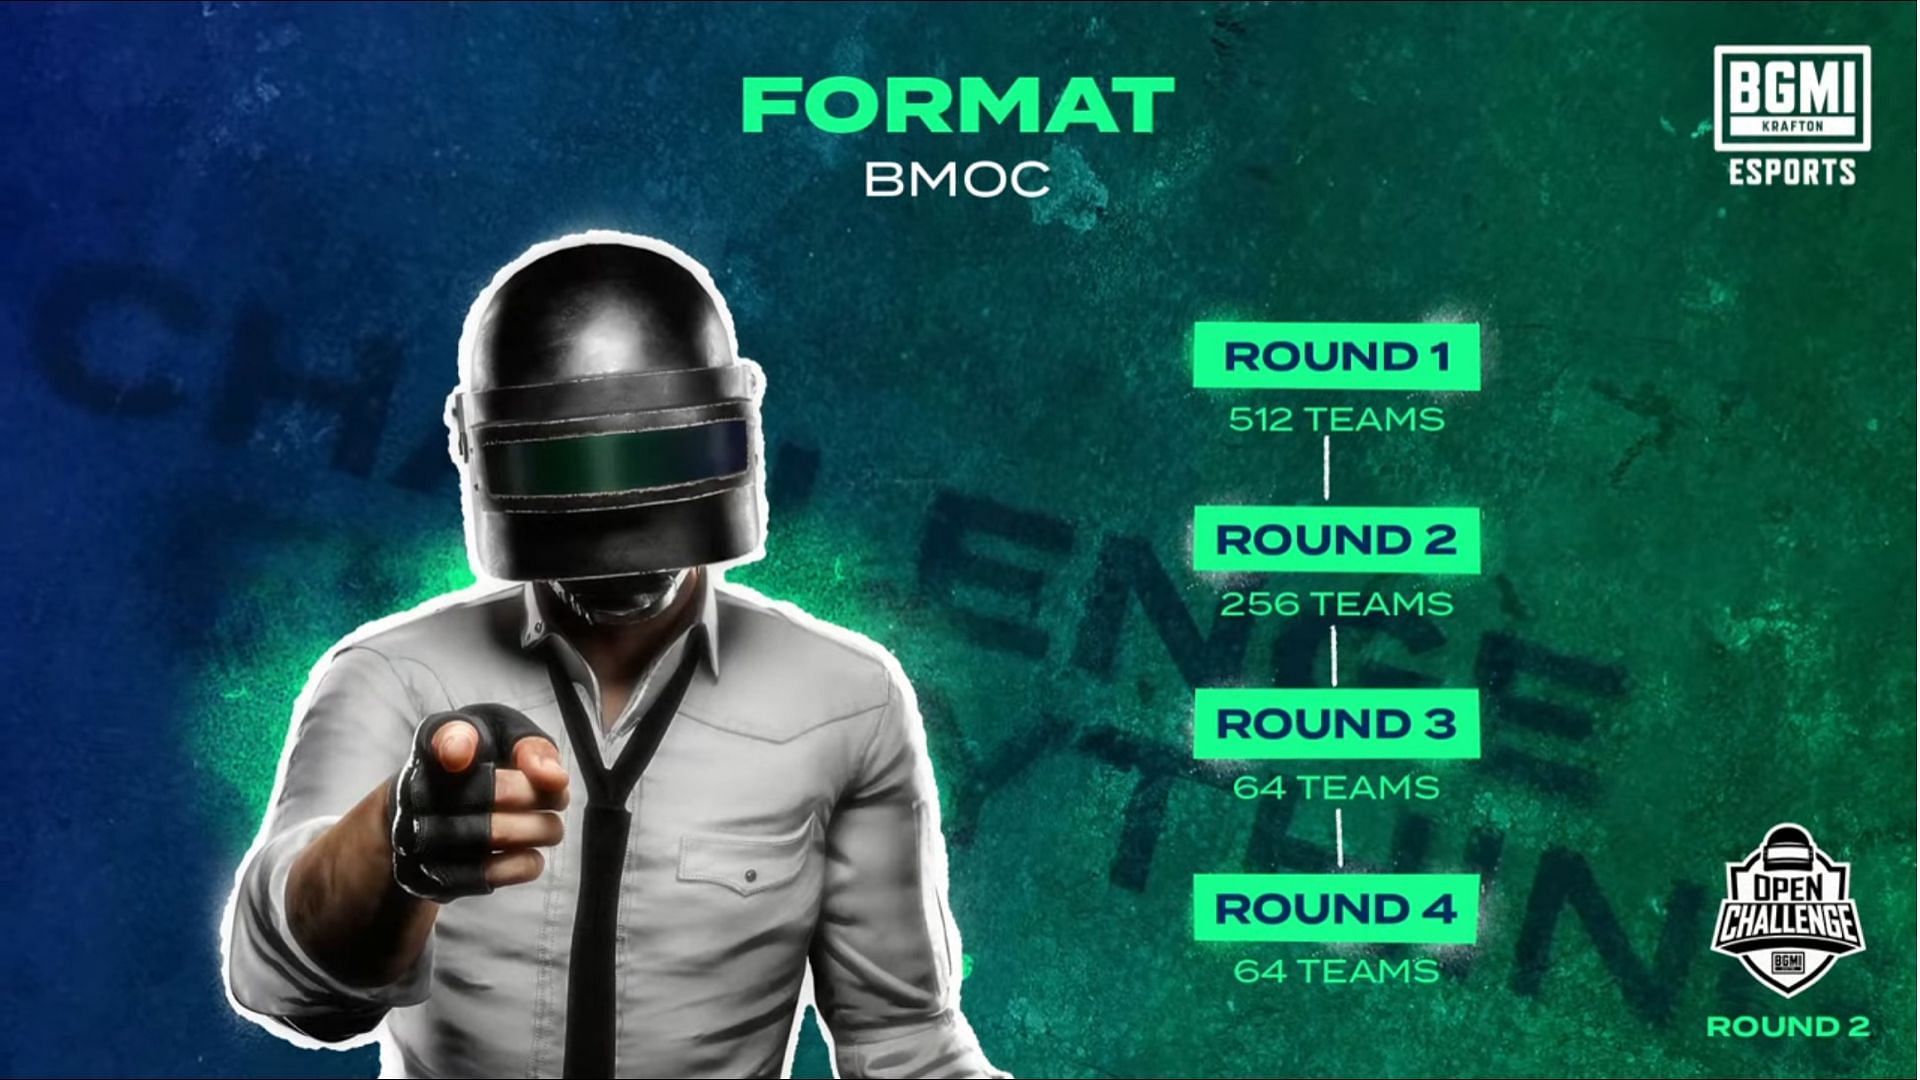 BMOC Format (Image via BGMI)